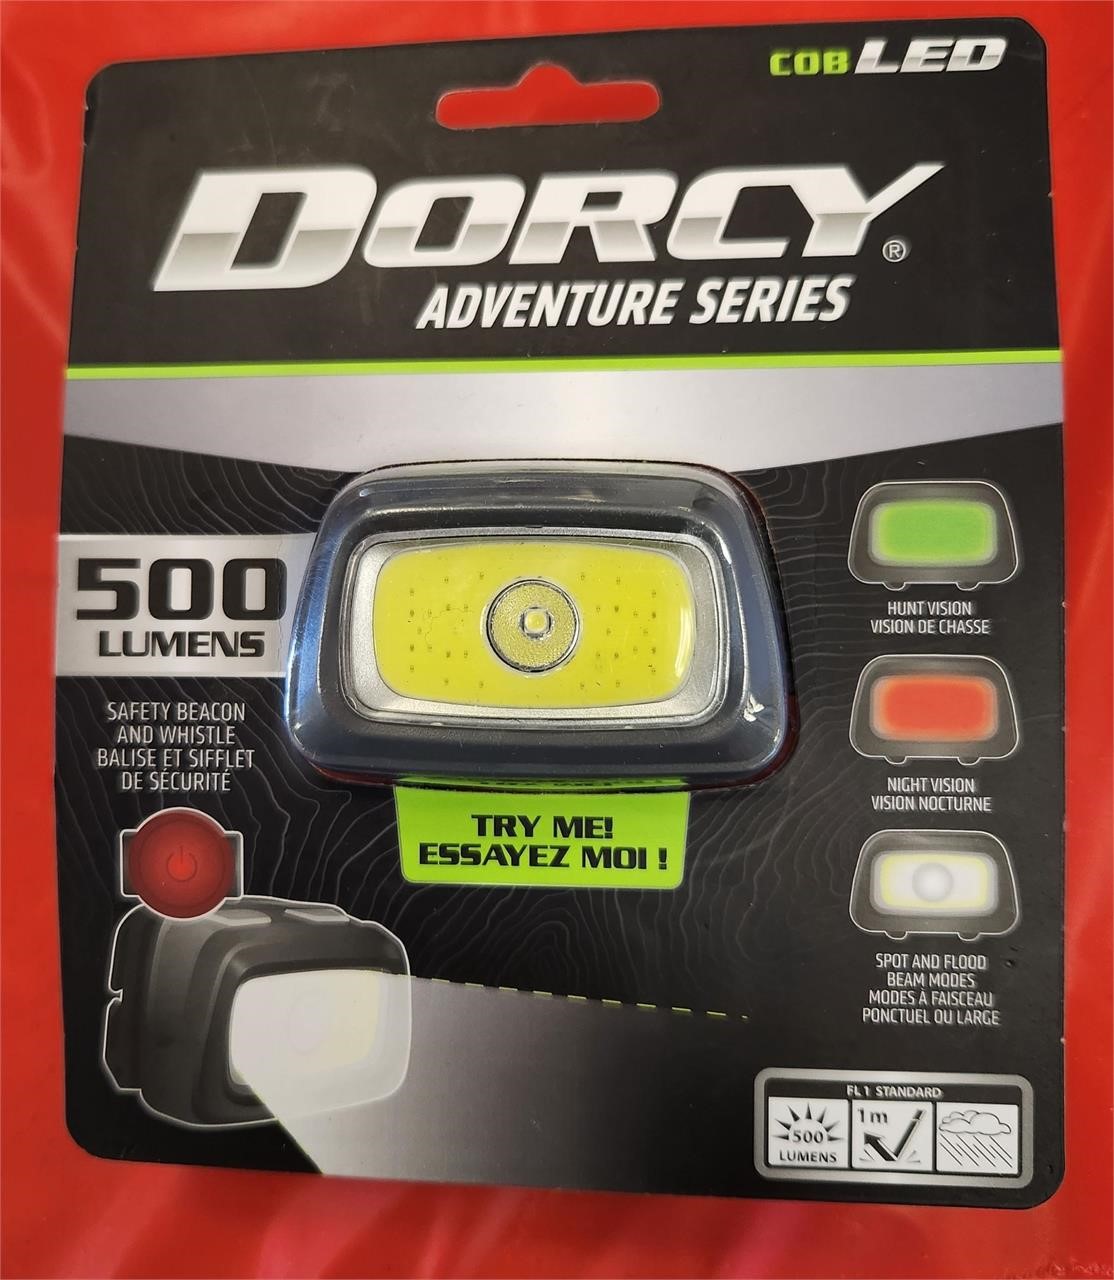 The Dorcy 500 Lumen Adventure headlamp